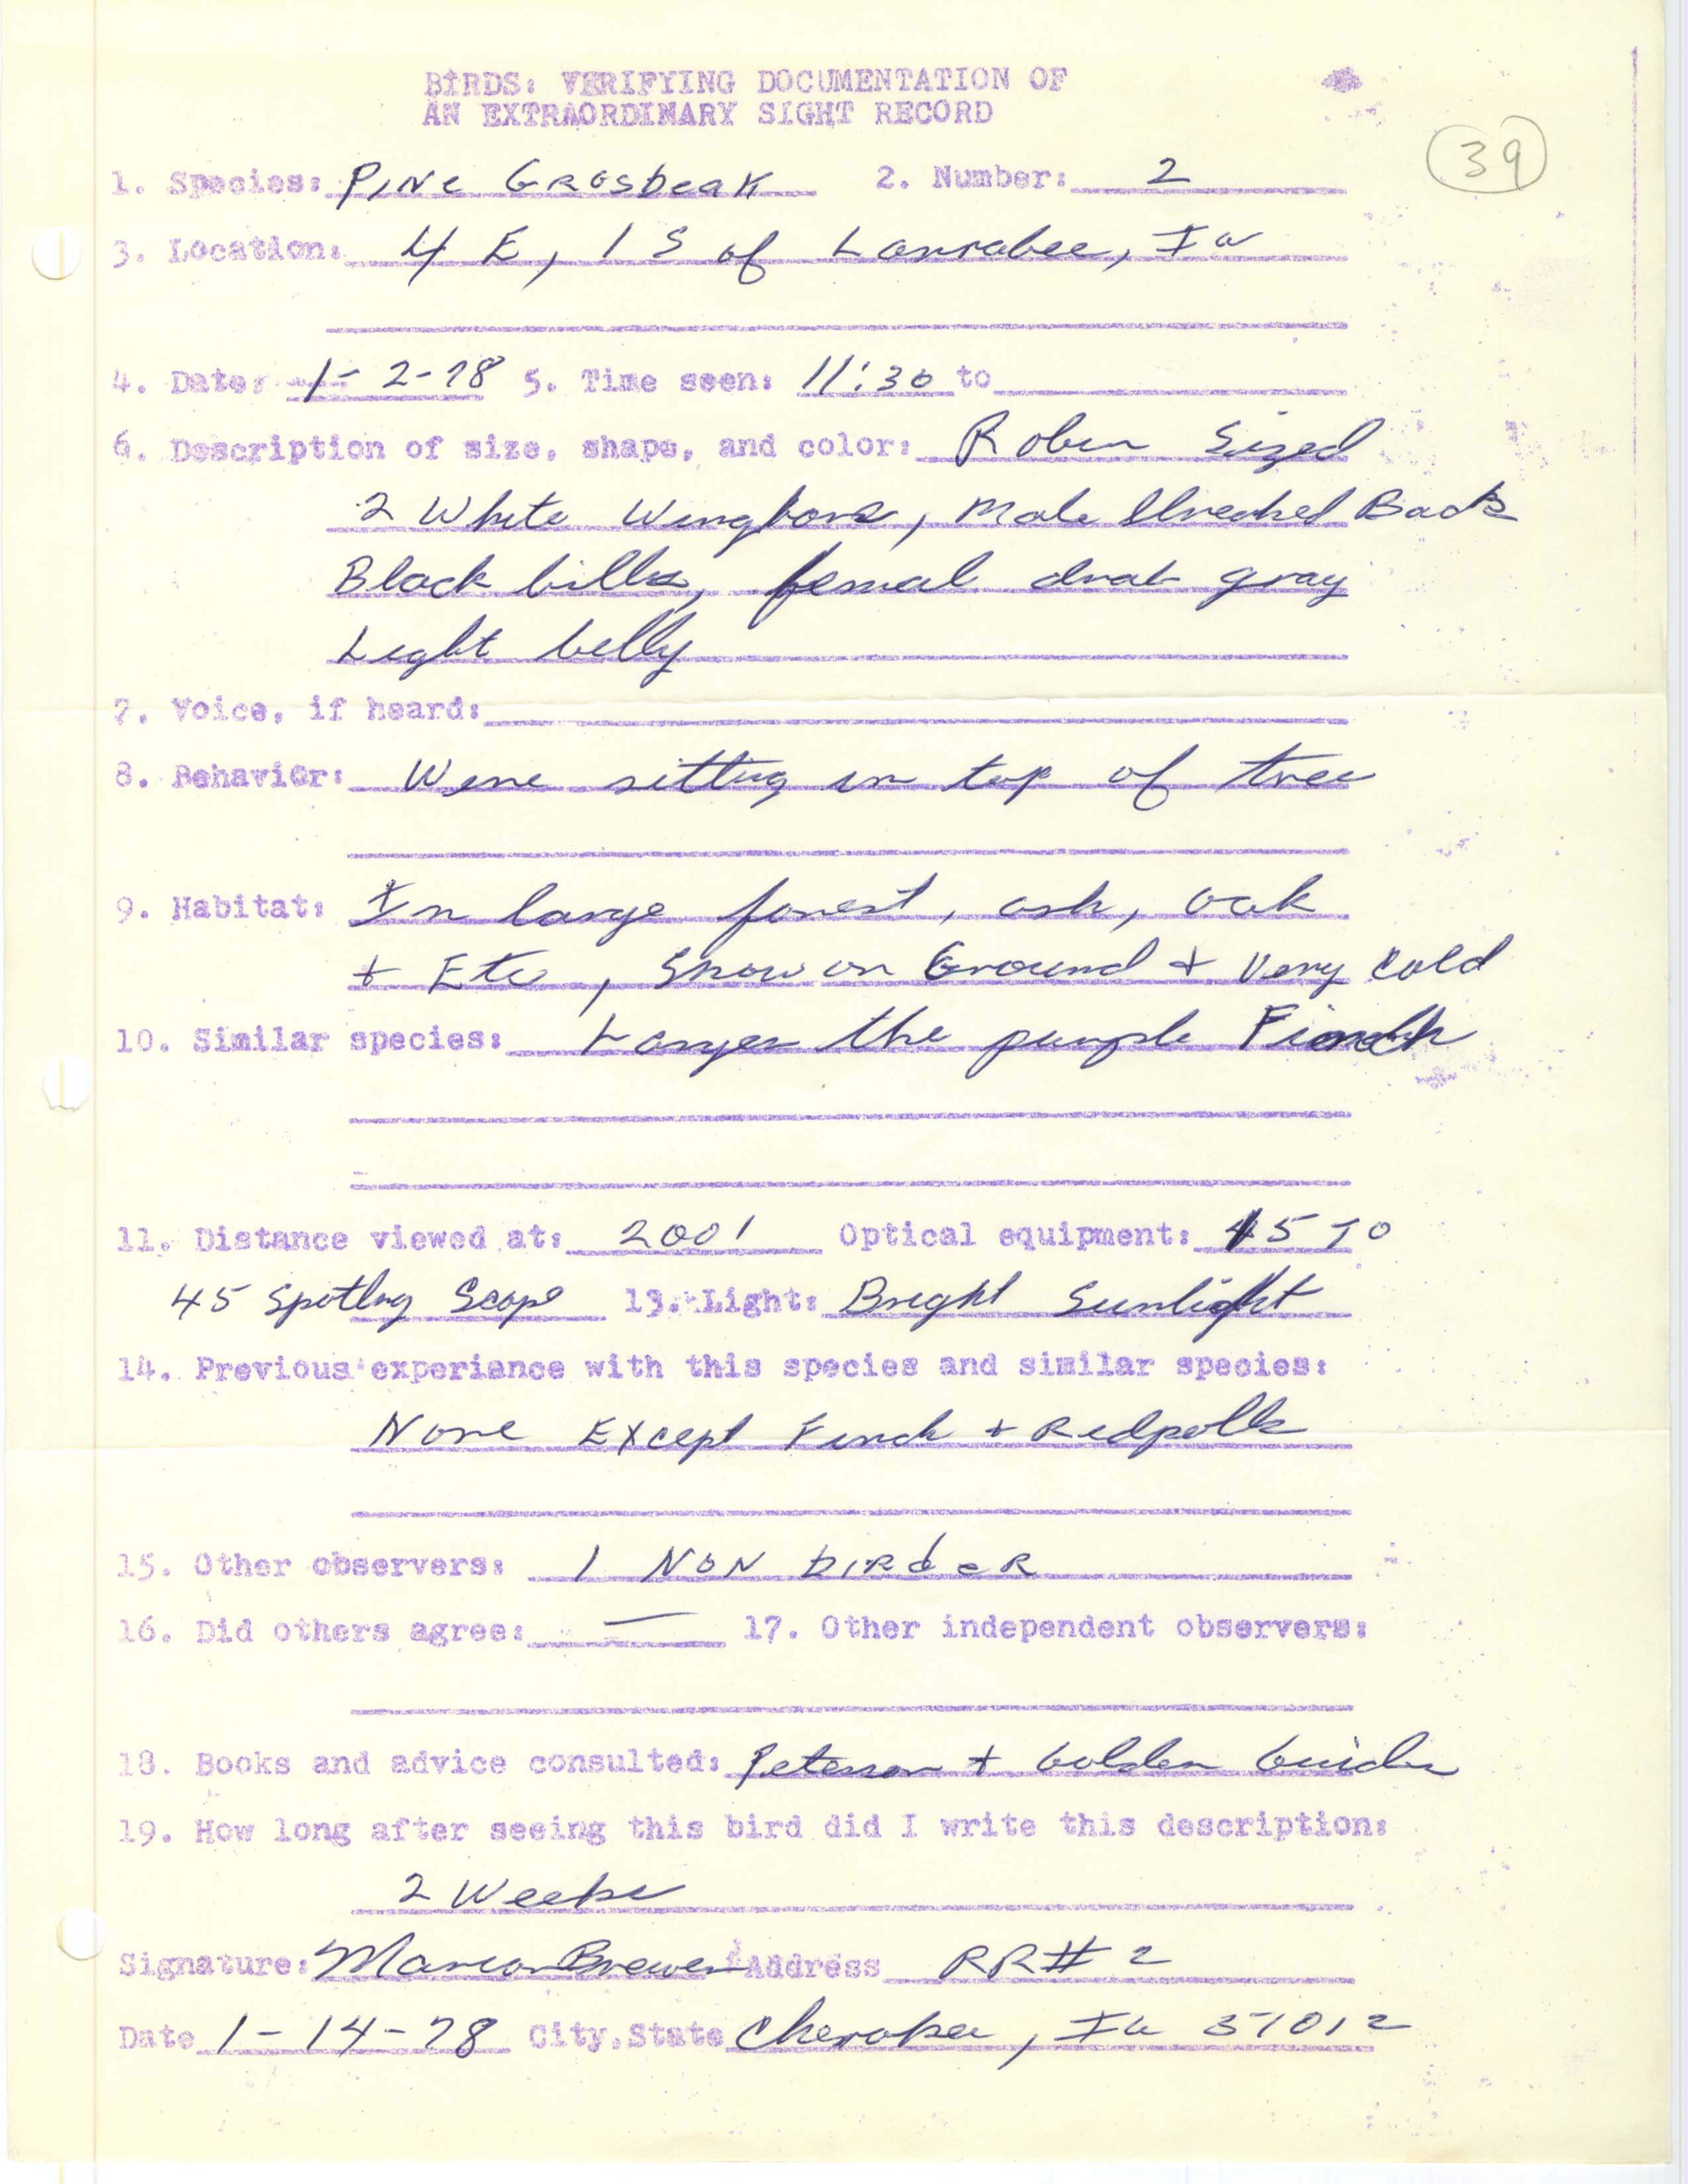 Rare bird documentation form for Pine Grosbeak at Larrabee, 1978